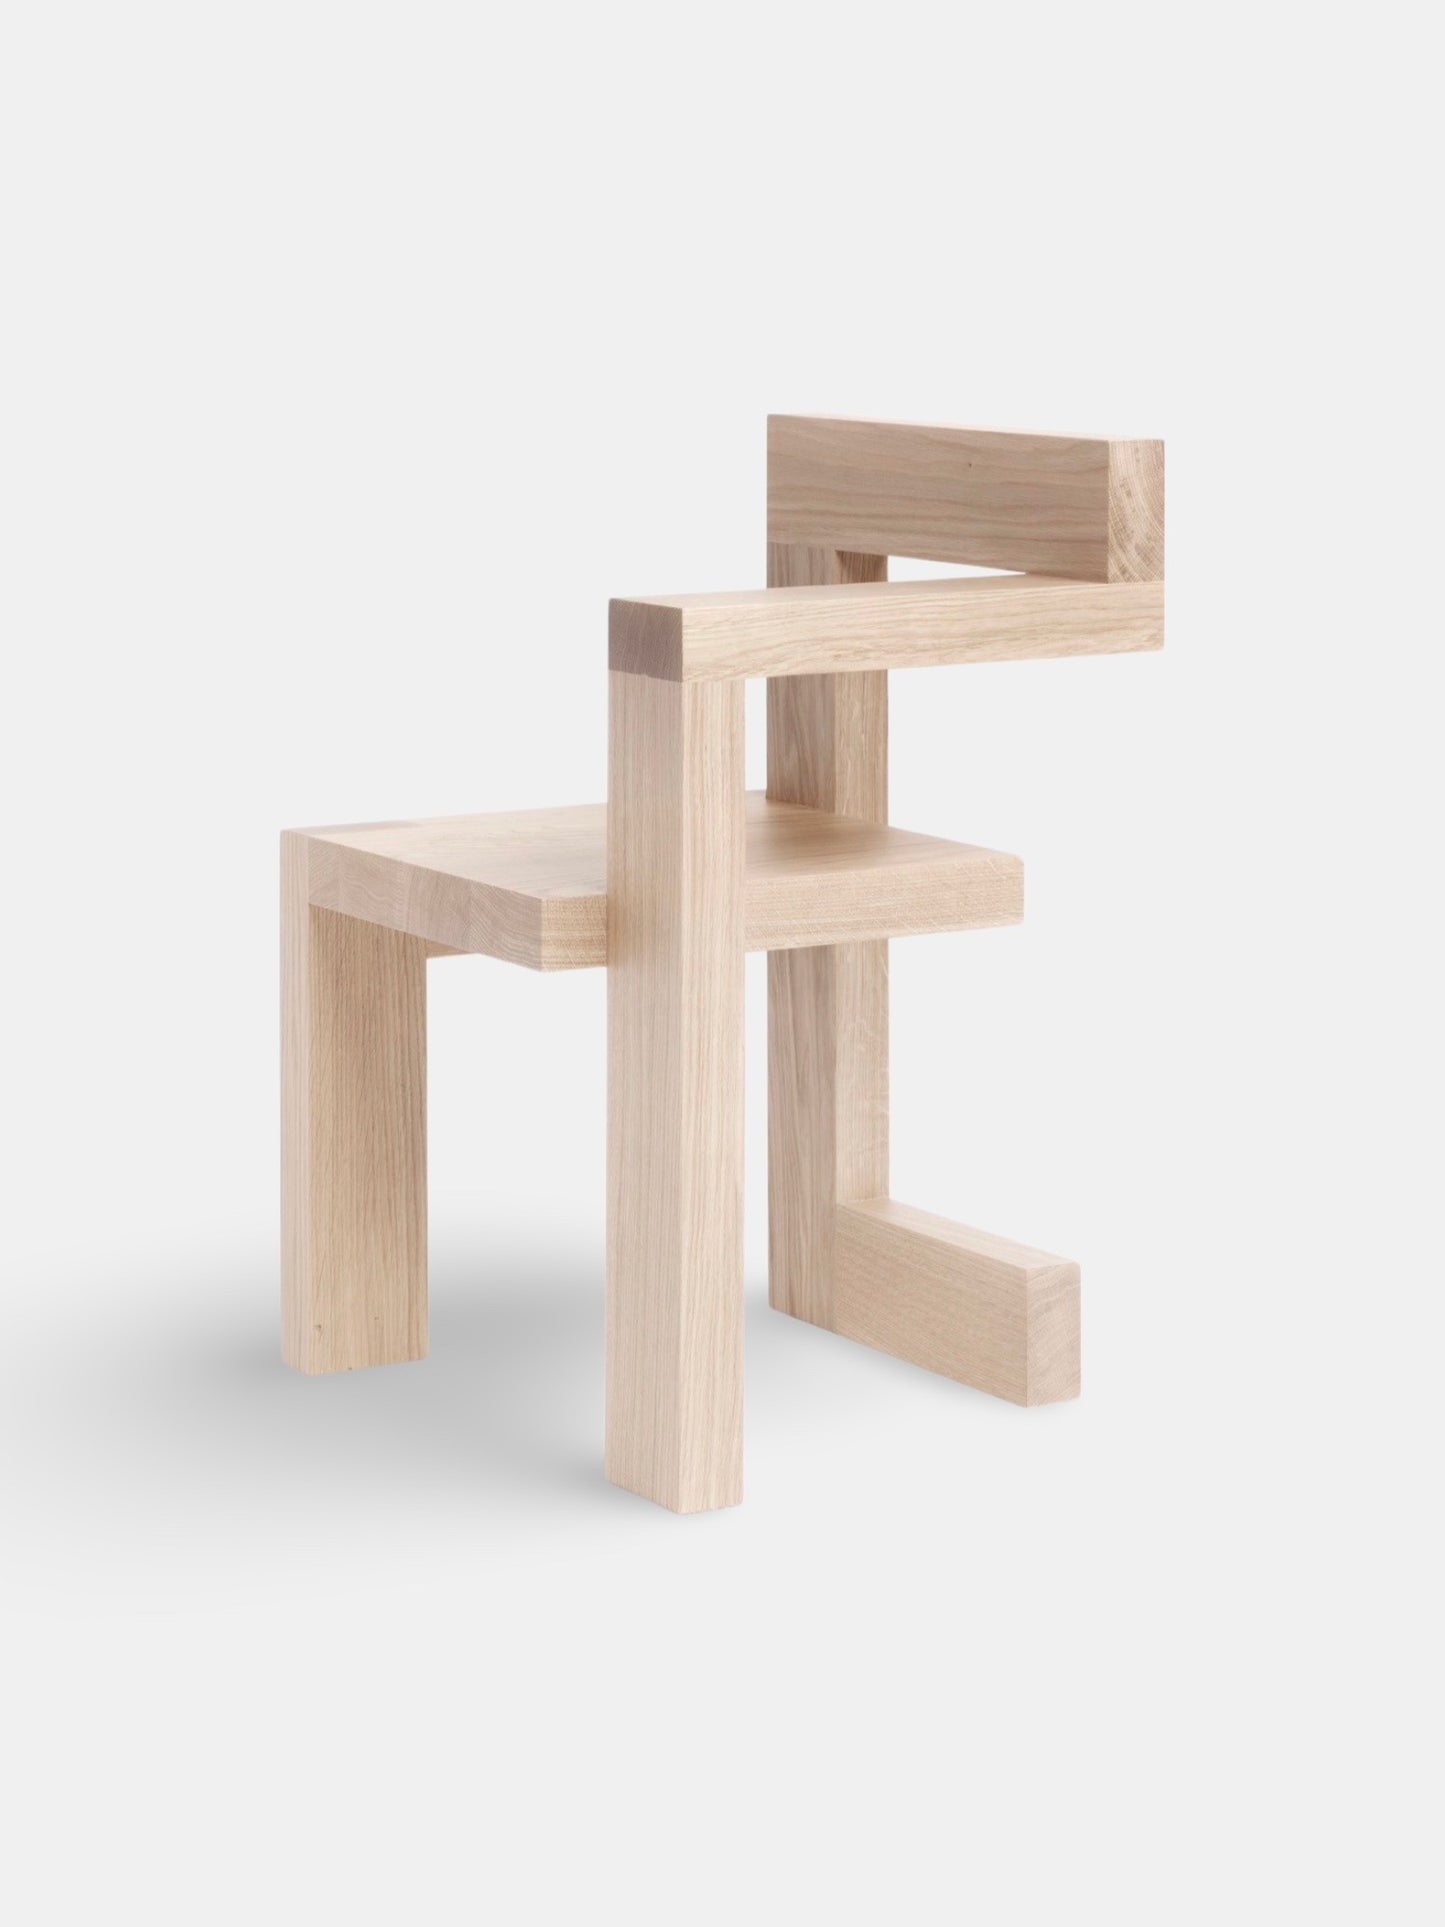 Steltman Chair designed by Gerrit Rietveld, 1963